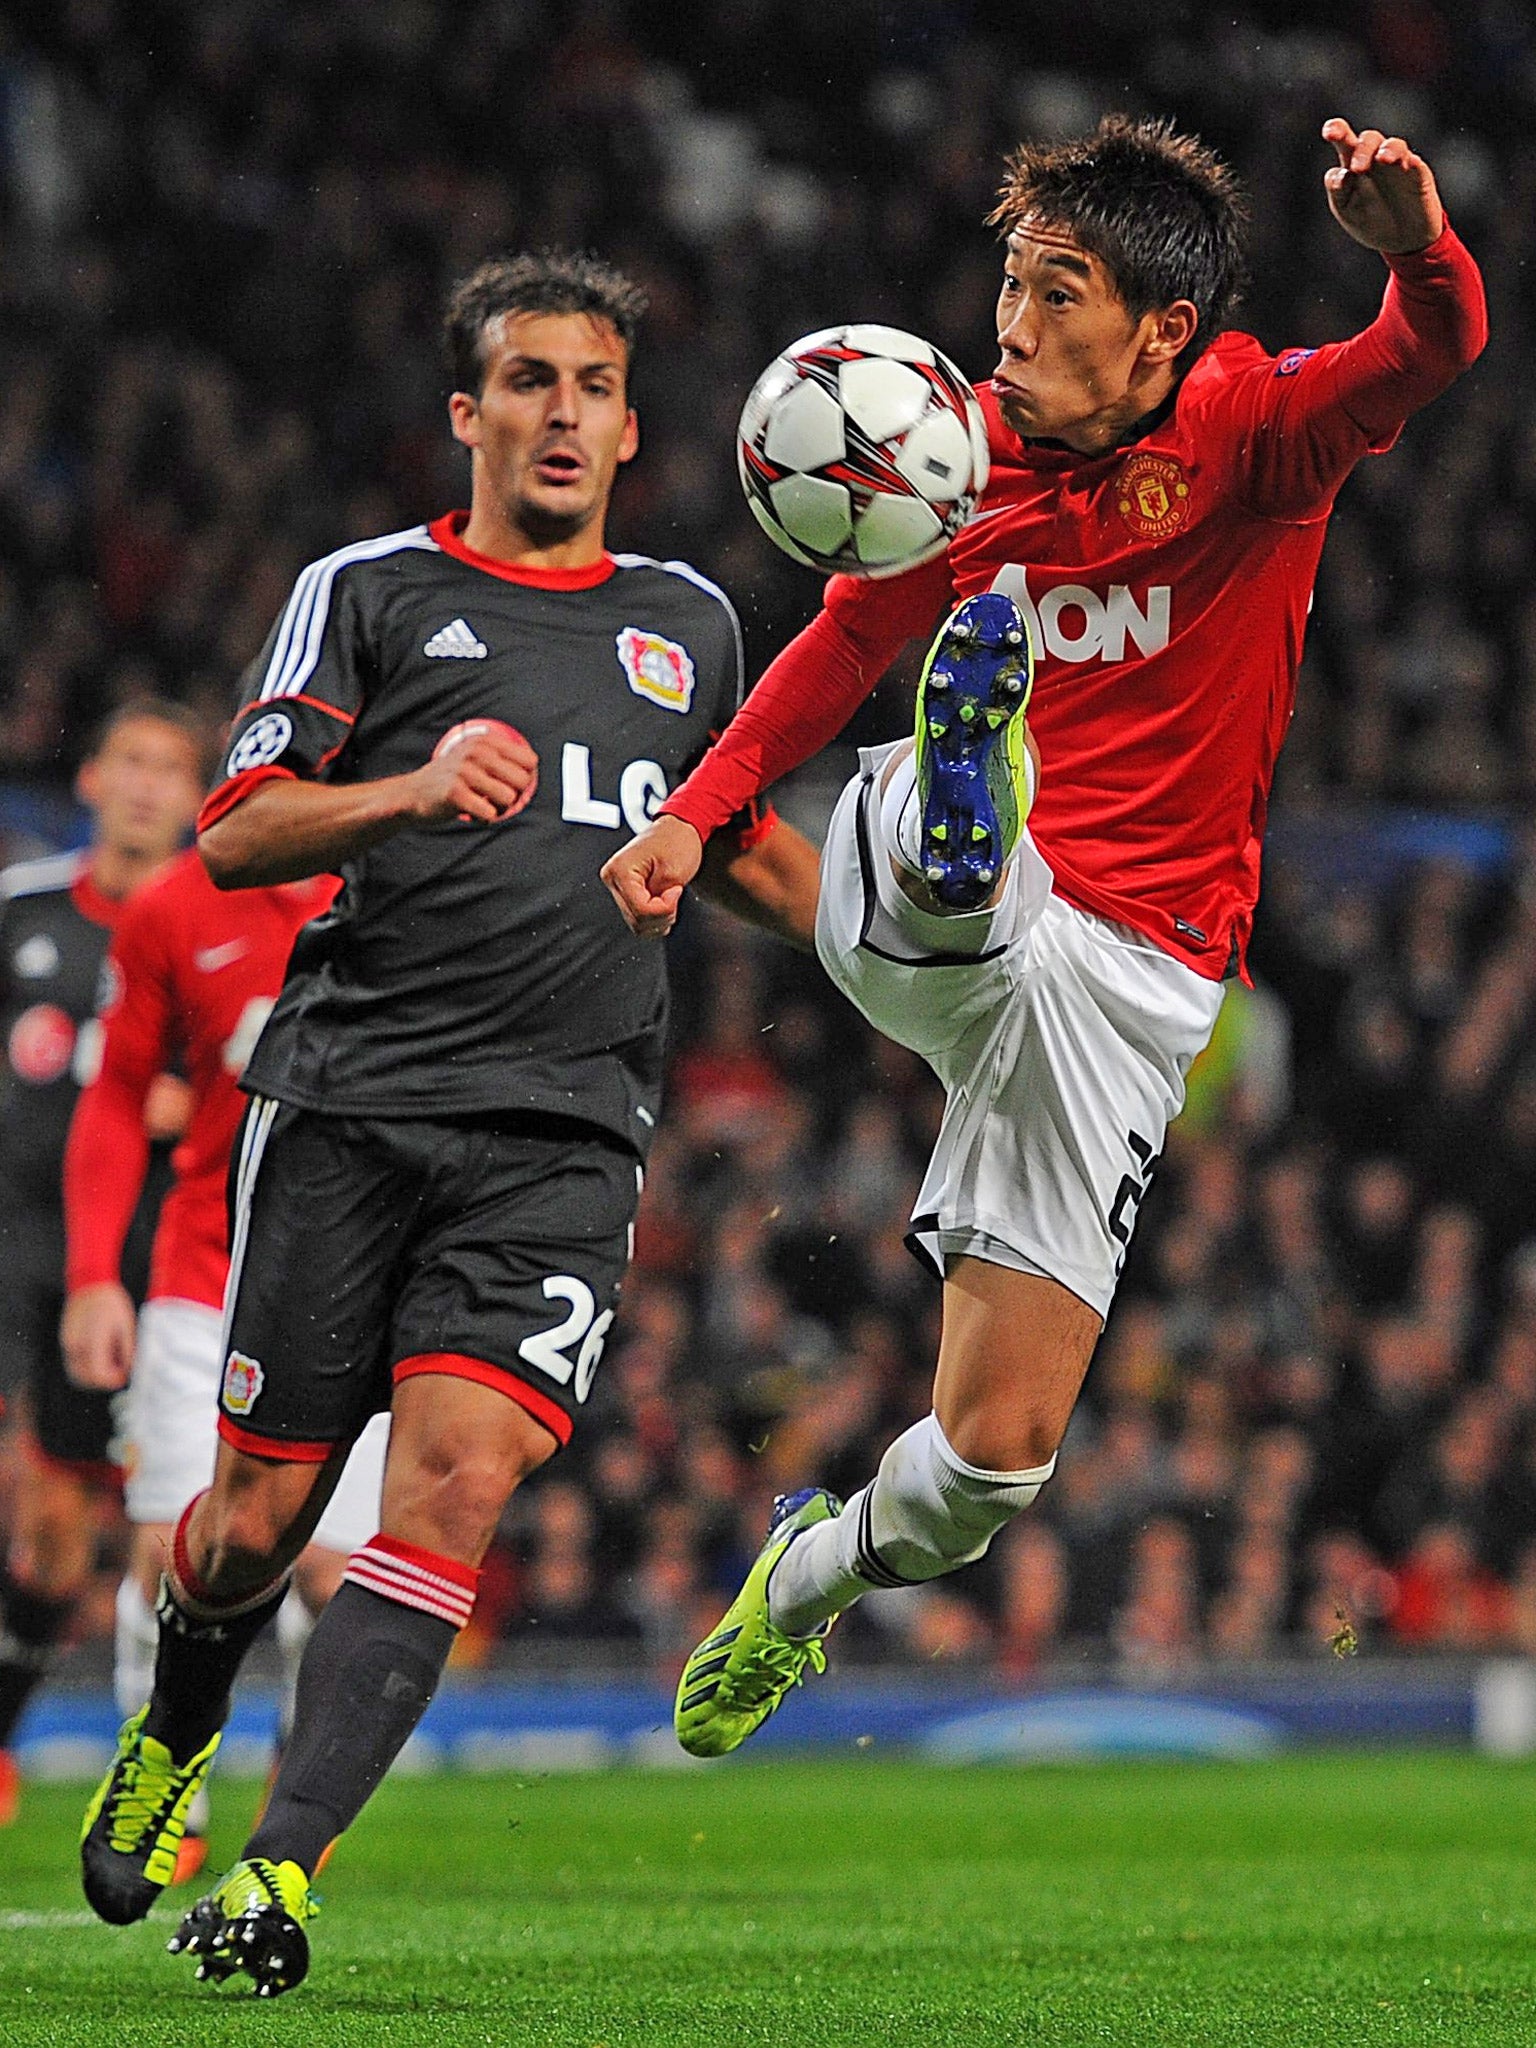 Shinji Kagawa played on the wing against Leverkusen